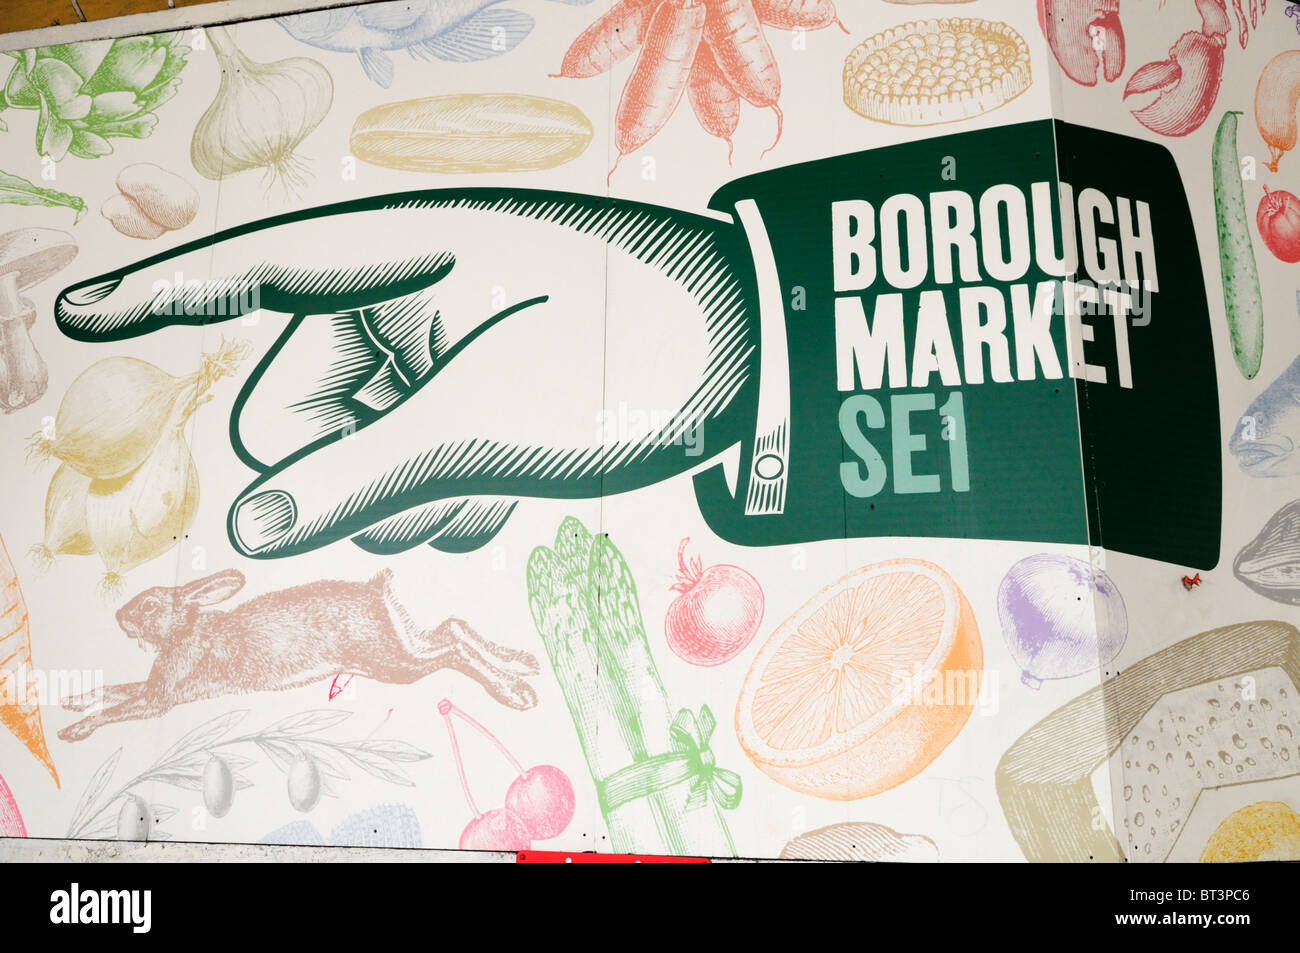 Borough Market SE1 signe, Southwark, London, England, UK Banque D'Images